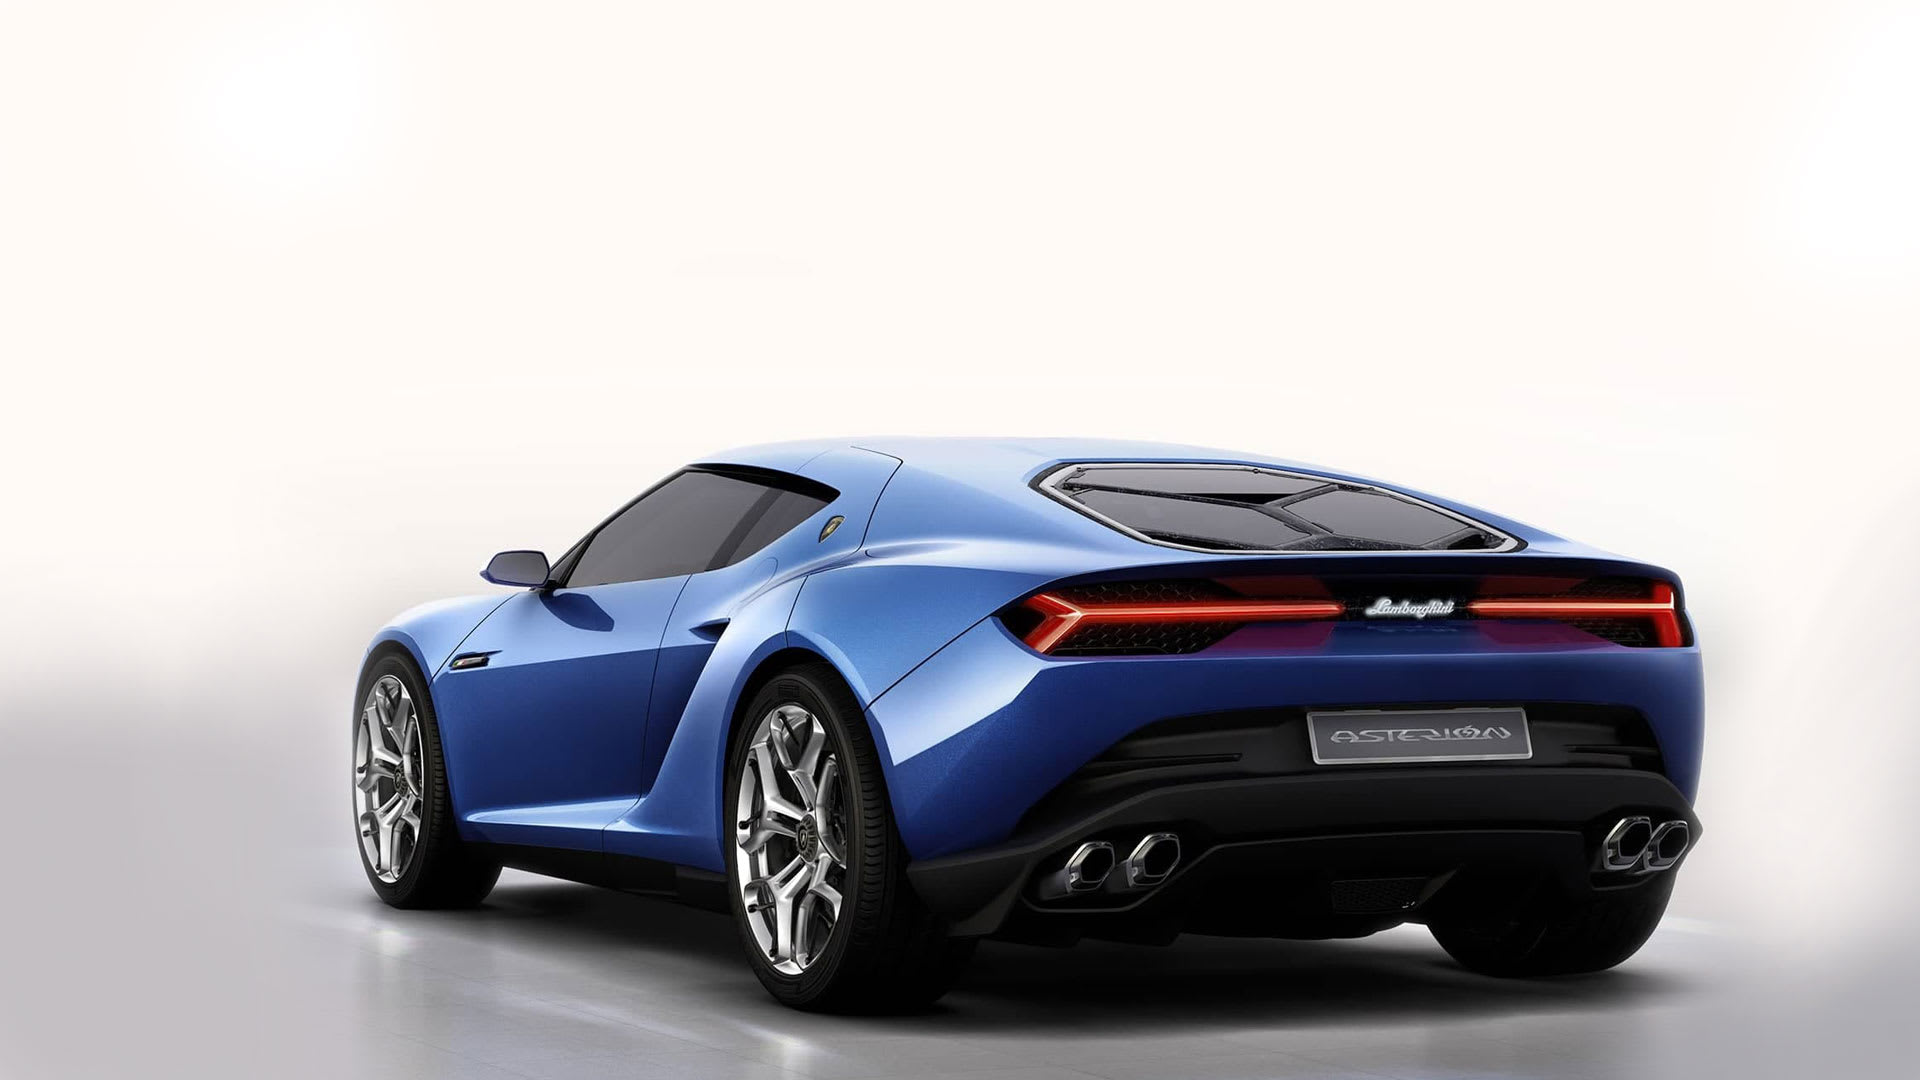 Lamborghini's EV initiatives seem to lack a spark